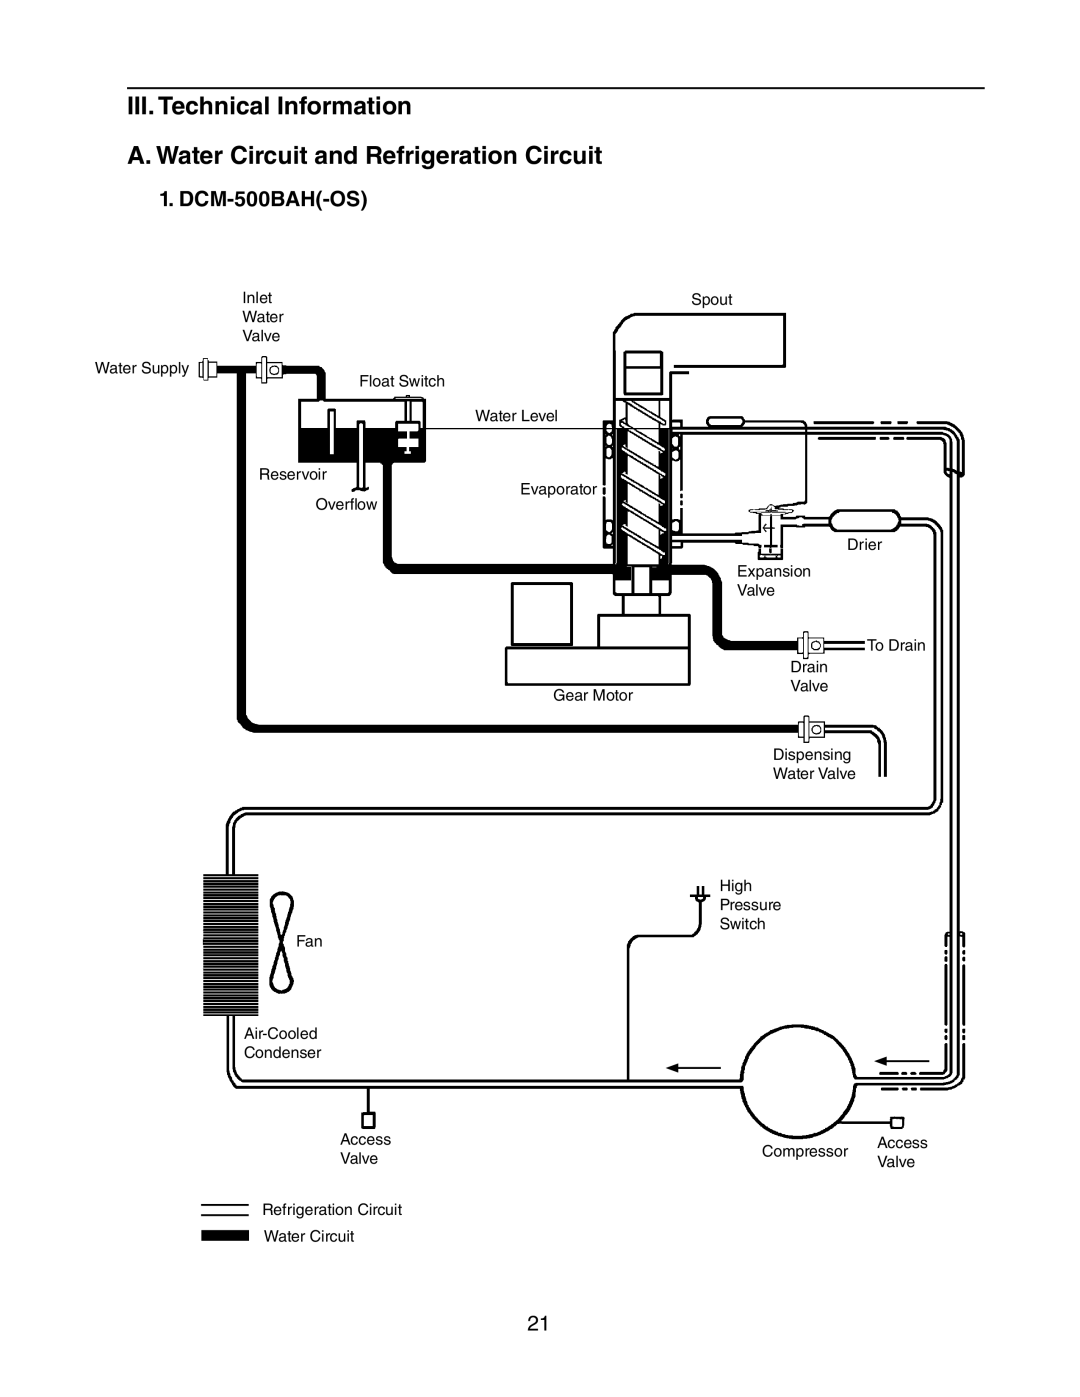 Hoshizaki DCM-500BWH-OS III. Technical Information, A. Water Circuit and Refrigeration Circuit, DCM-500BAH-OS 